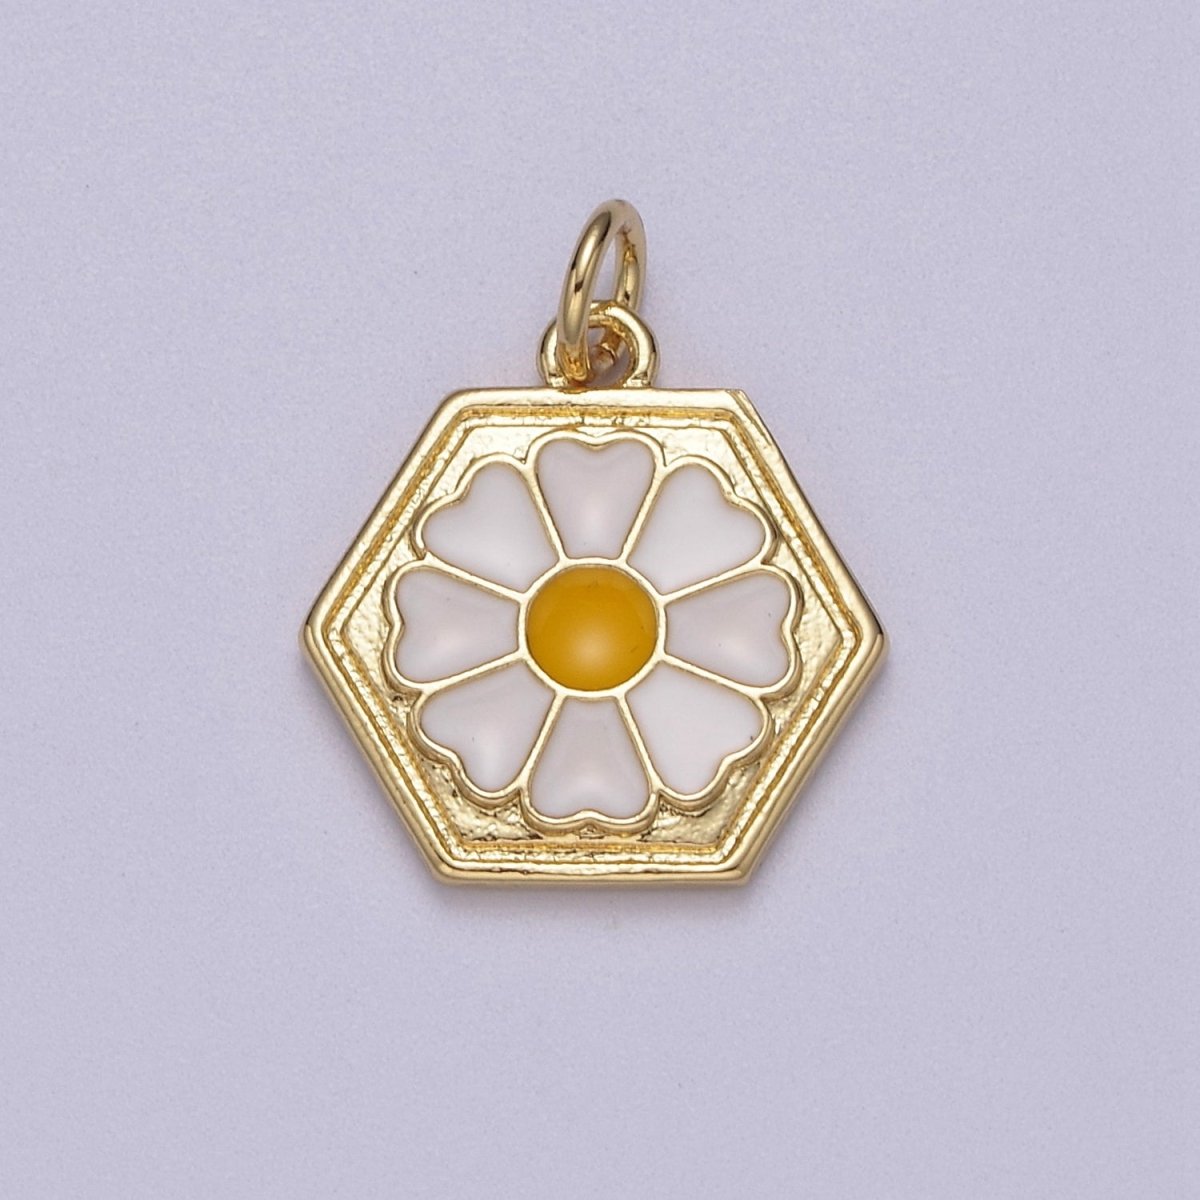 Dainty Daisy Charm Small Gold Filled Enamel Flower Pendant W-167 - DLUXCA